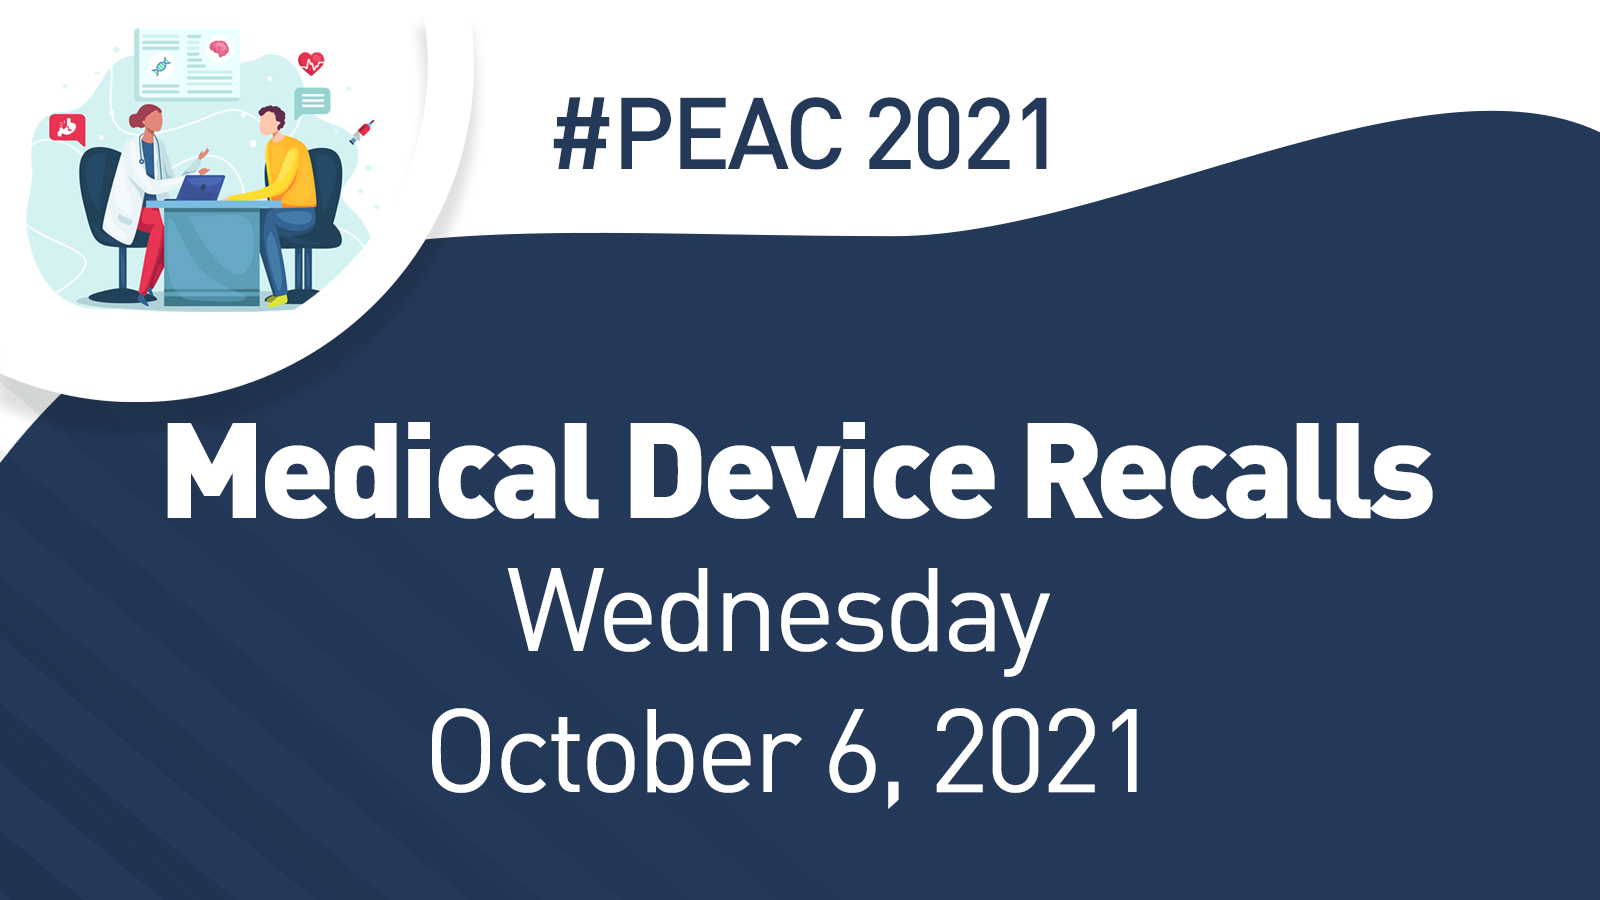 PEAC 2021 - Medical Device Recalls October 6, 2021